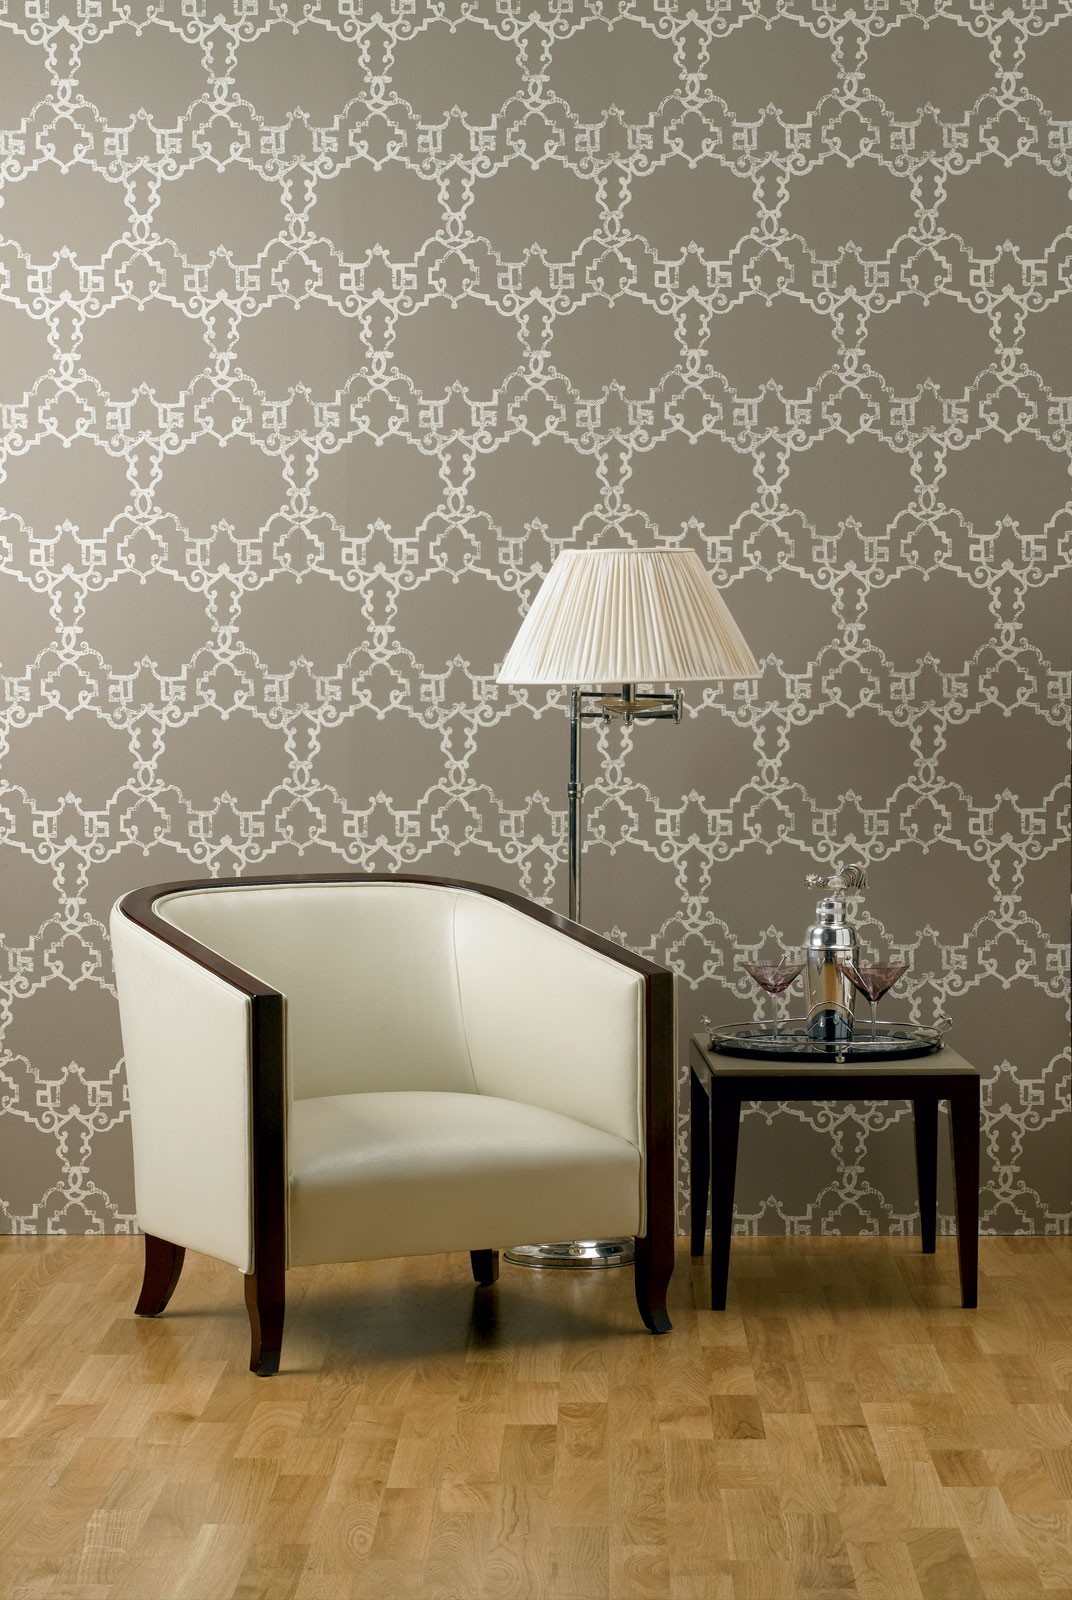 birdcage wallpaper,wall,wallpaper,furniture,room,interior design